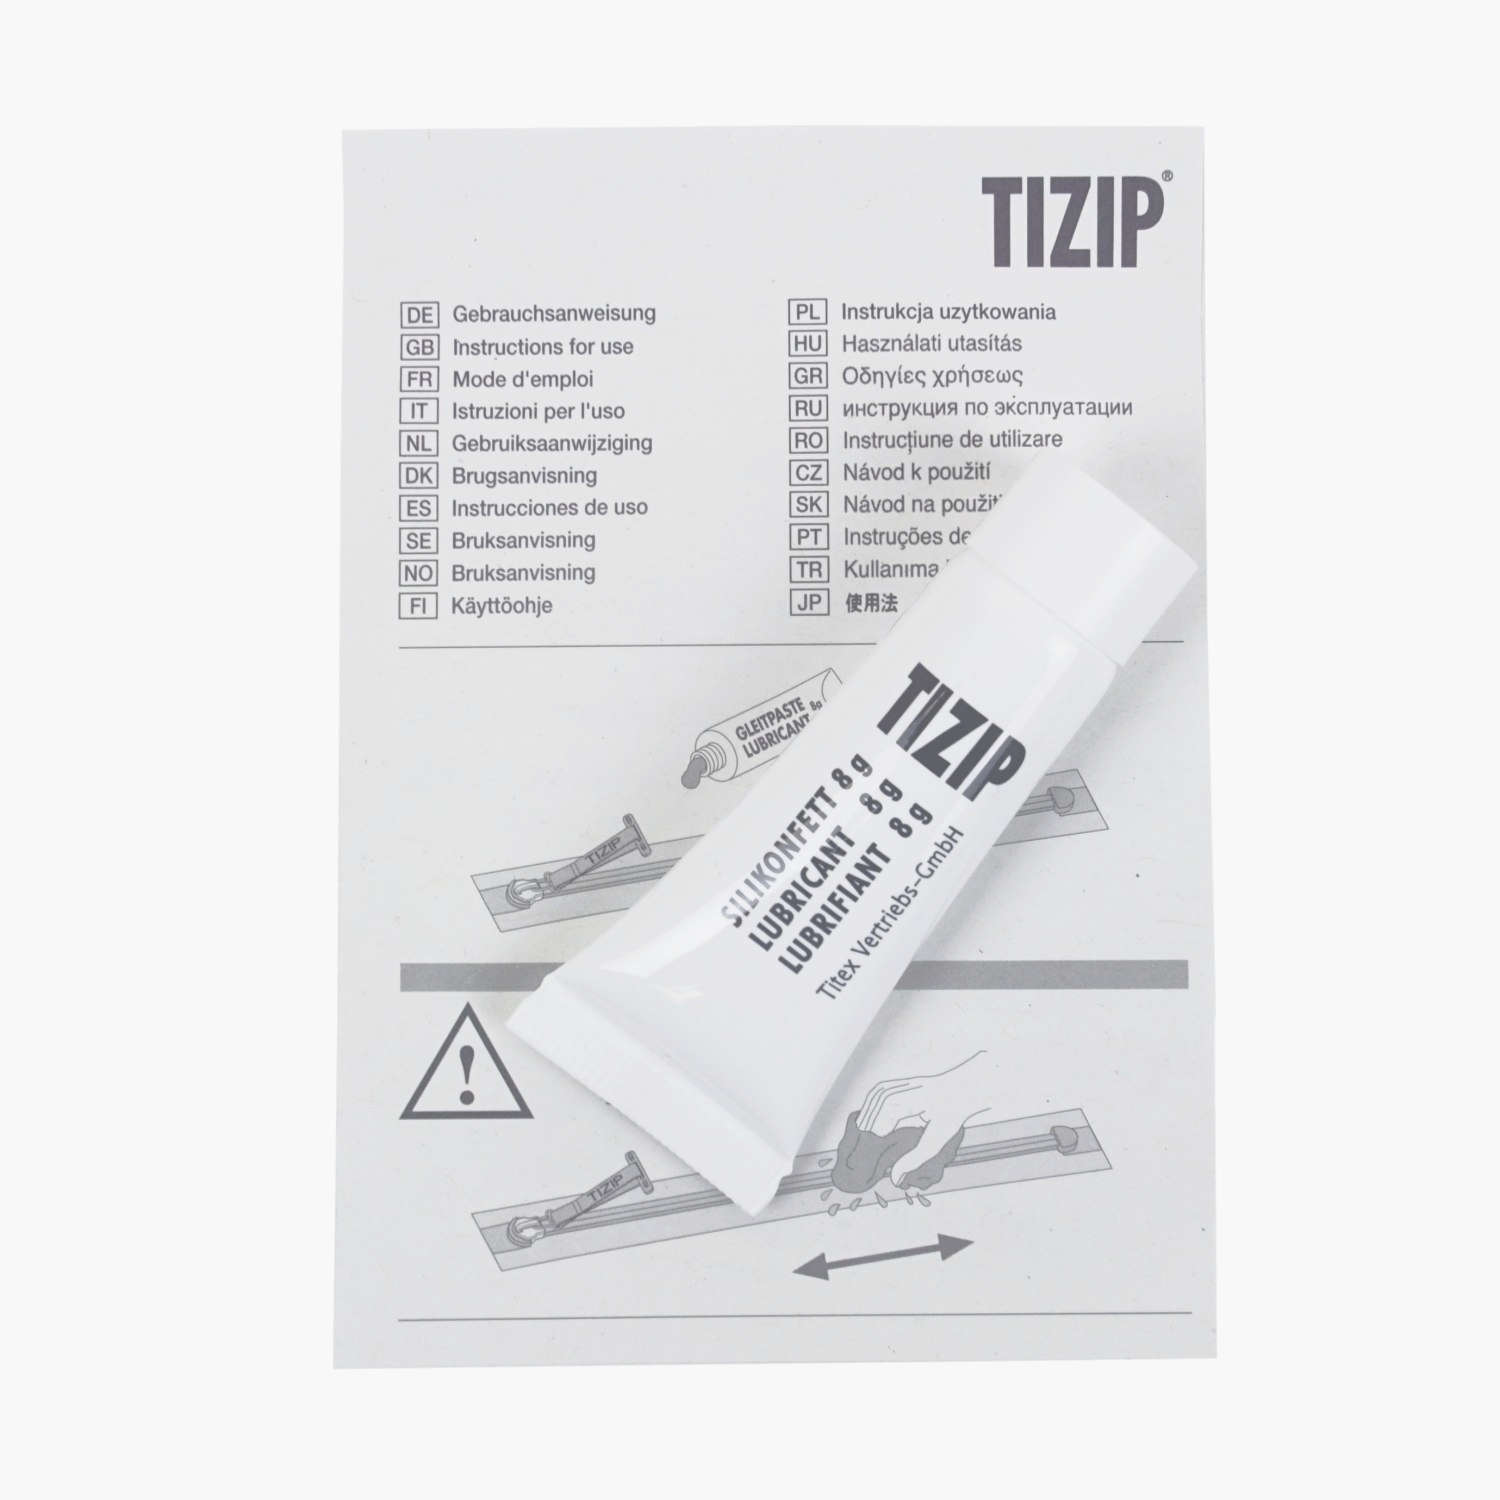 Zip Tech Zipper Lubricant